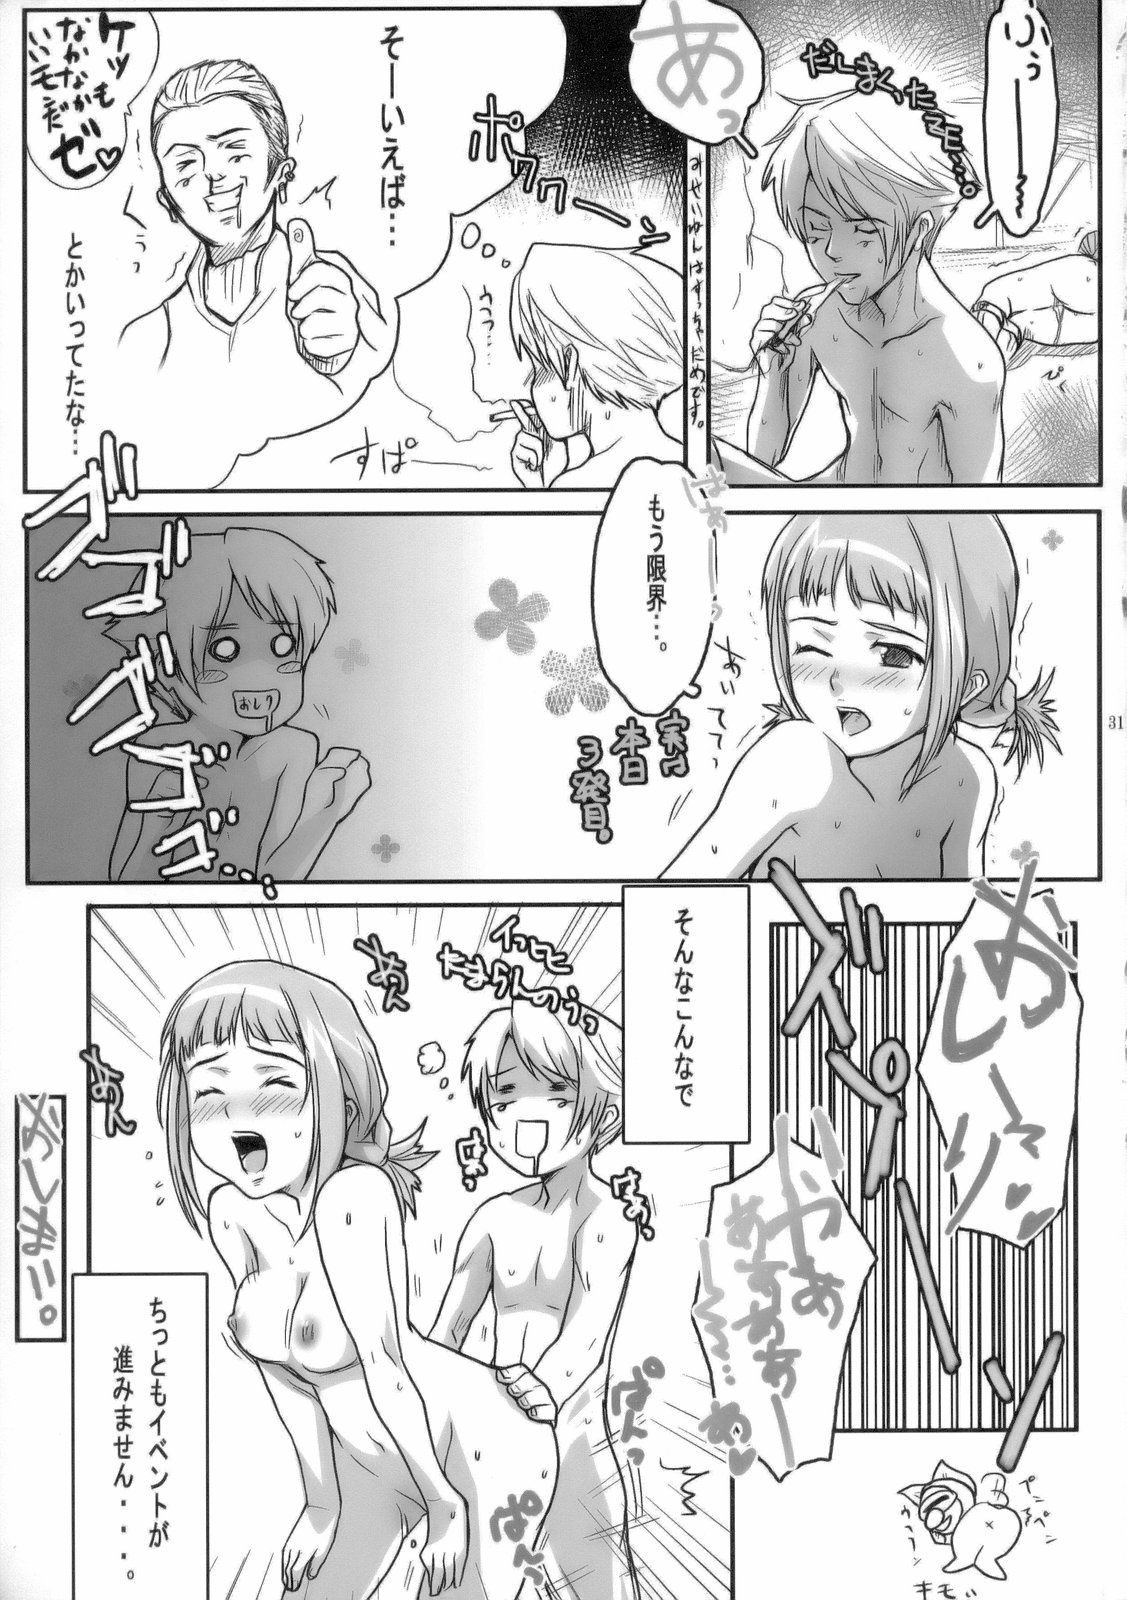 (C70) [Air Praitre (Ogata Mamimi, TAKUMI)] Tsumi o Yurushite... (Final Fantasy XII) (C70) [AirΦPraitre (緒方マミ美、TAKUMI)] 罪を許して… (ファイナルファンタジーXII)